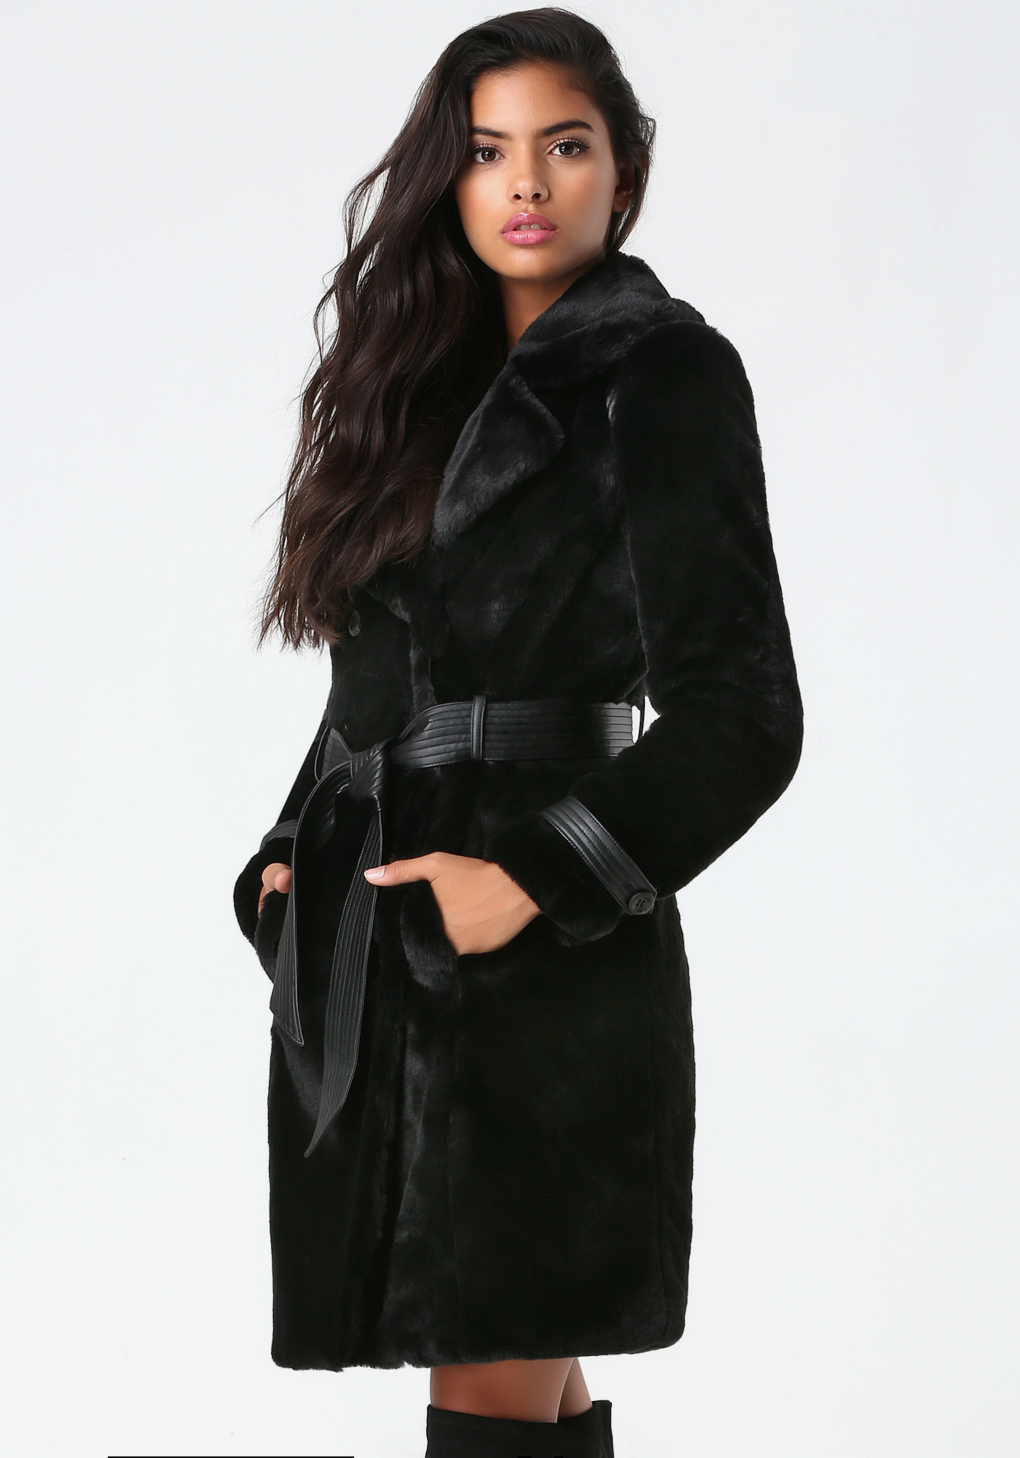 Bebe Faux Fur Trench Coat in Black - Lyst